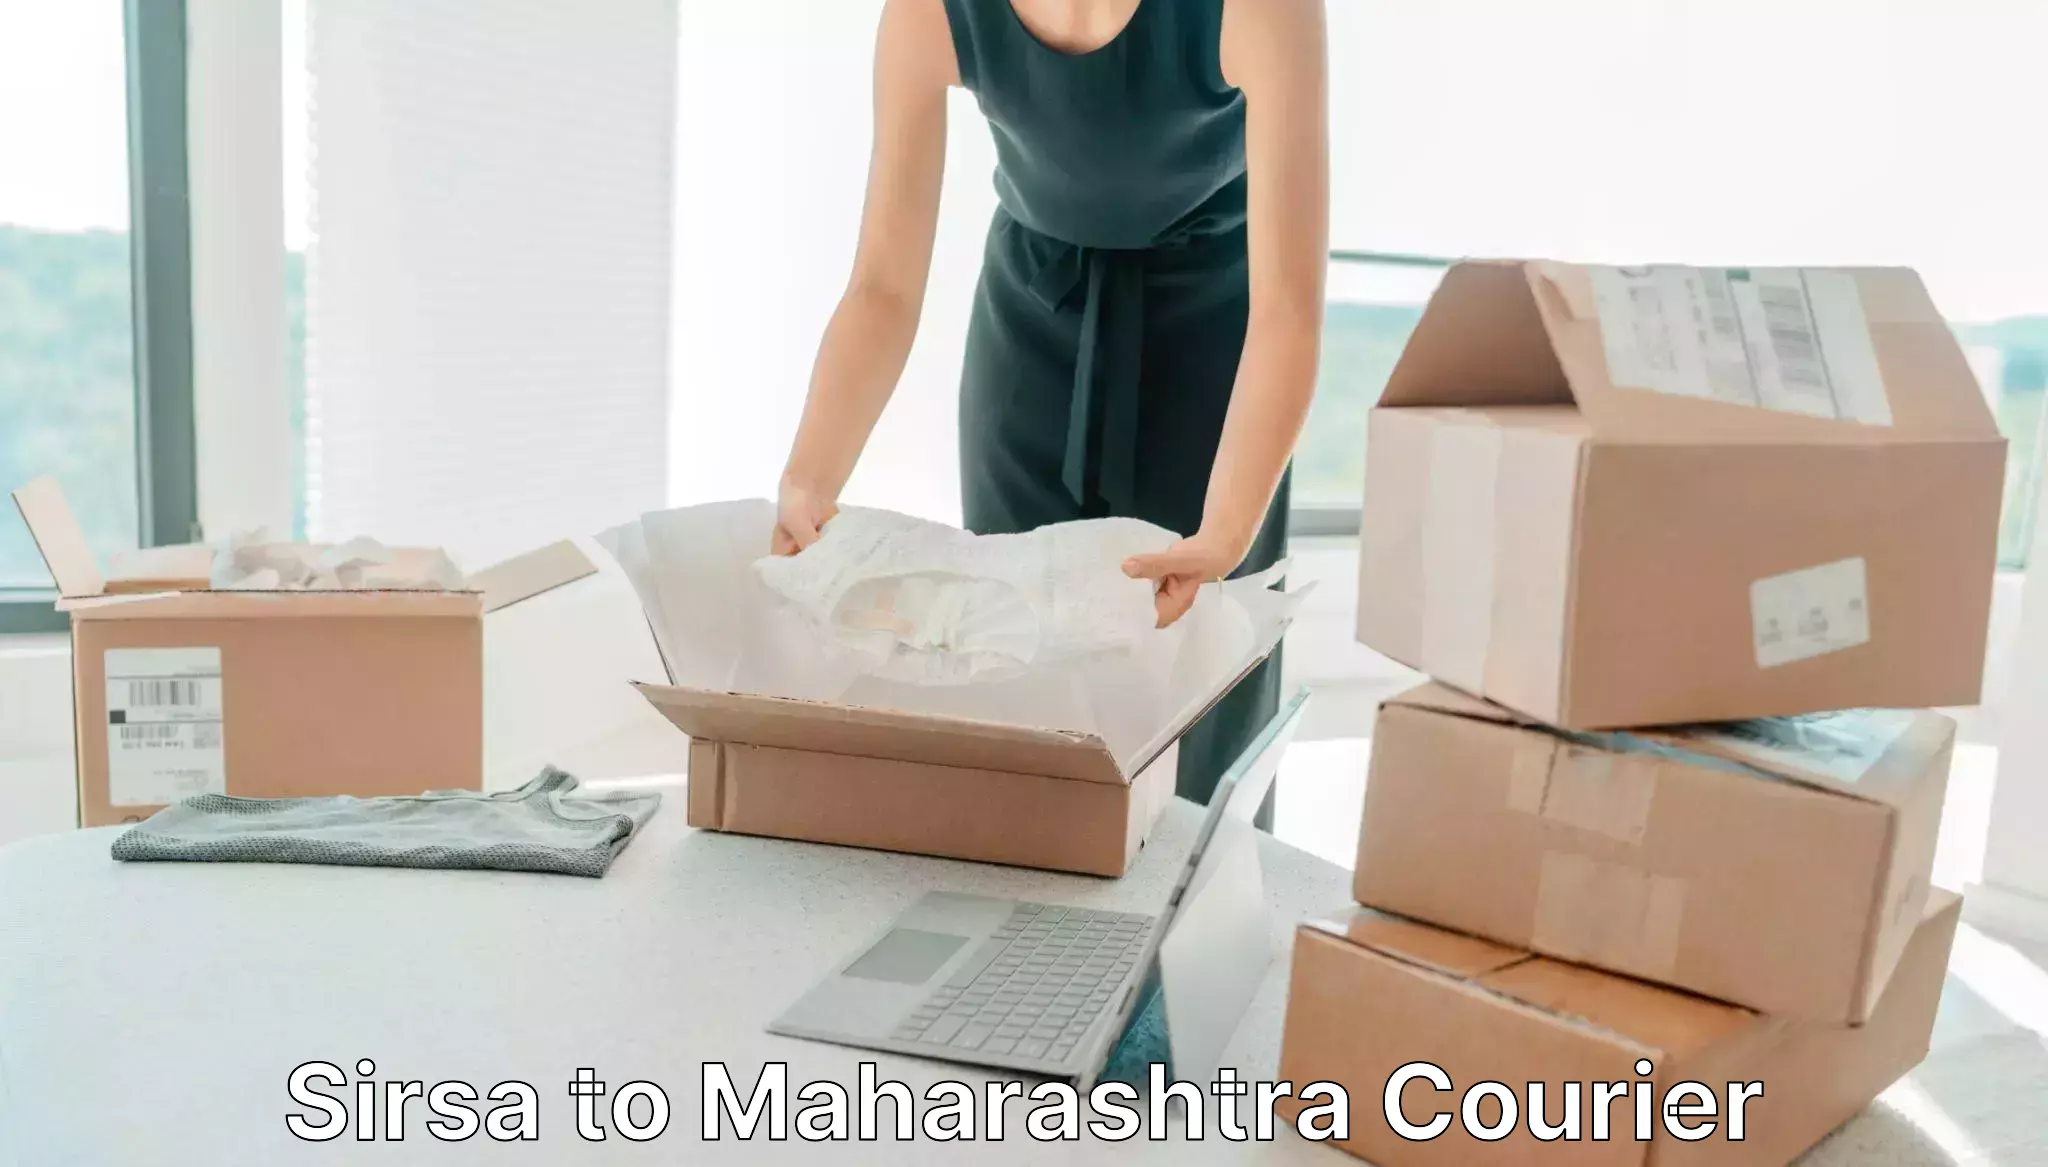 Modern courier technology Sirsa to Mahabaleshwar